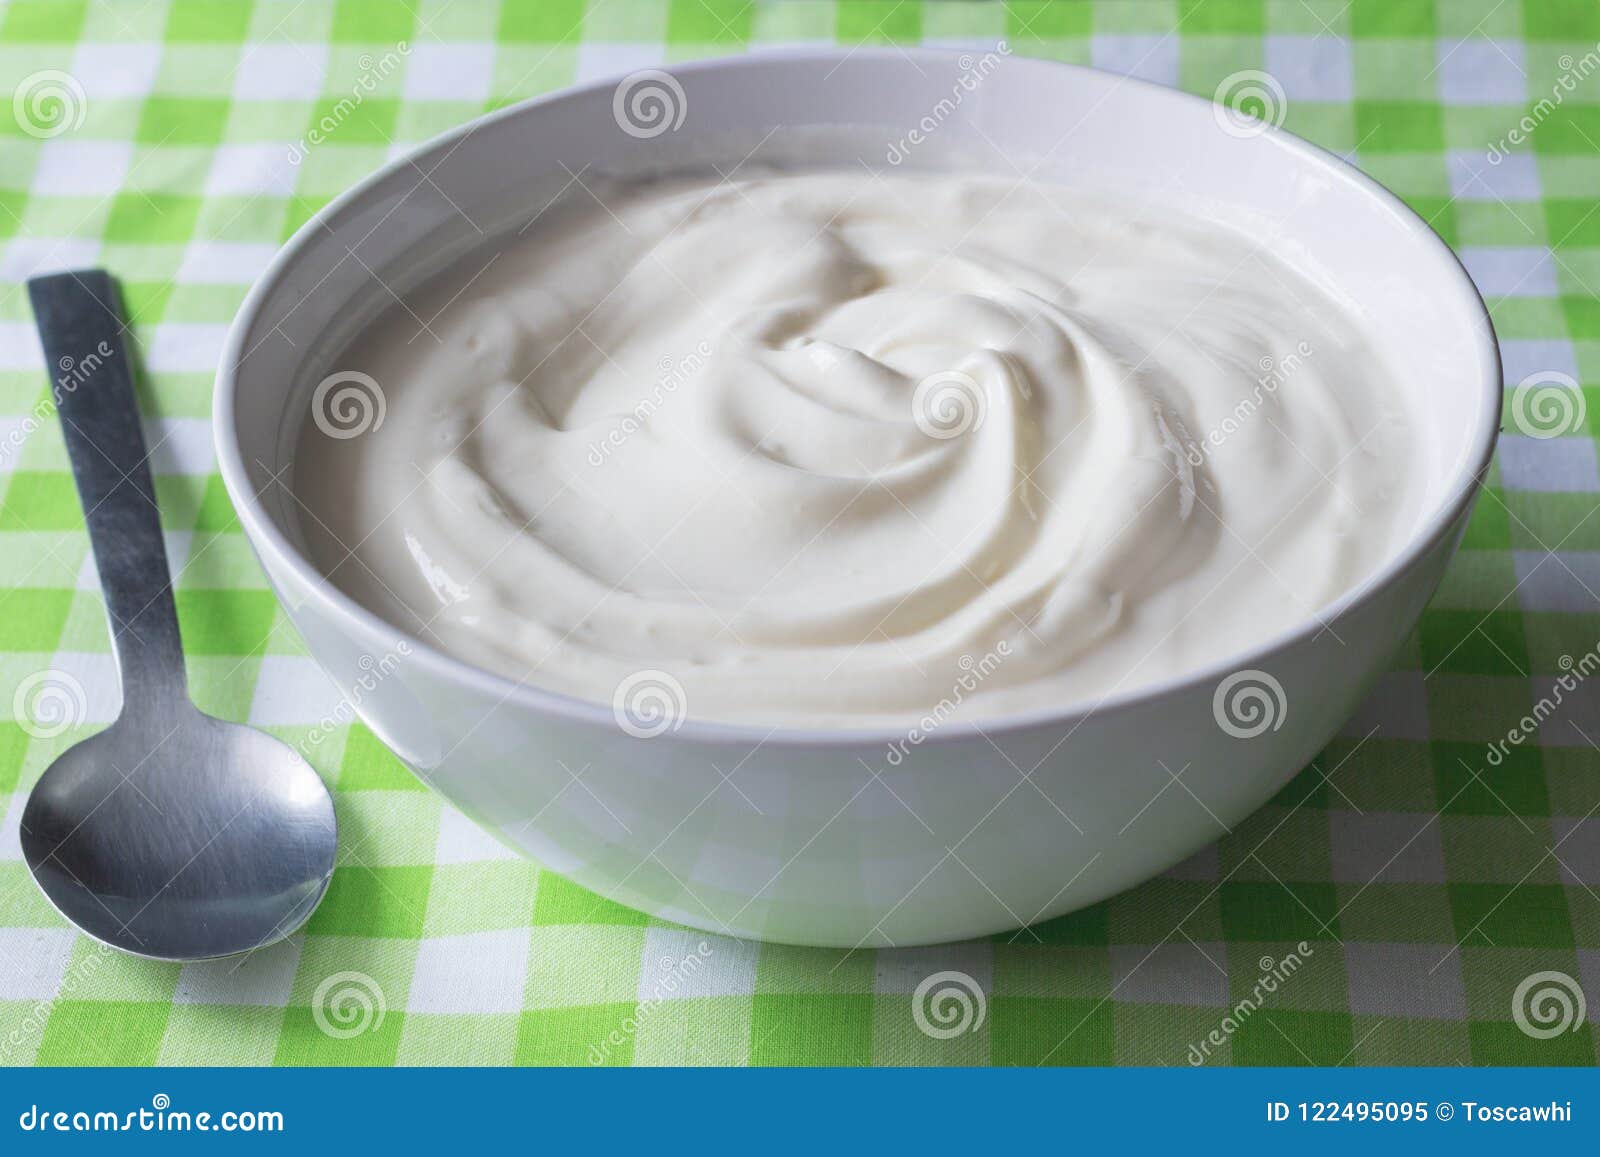 natural plain white greek yoghurt in bowl closeup - yogurt background